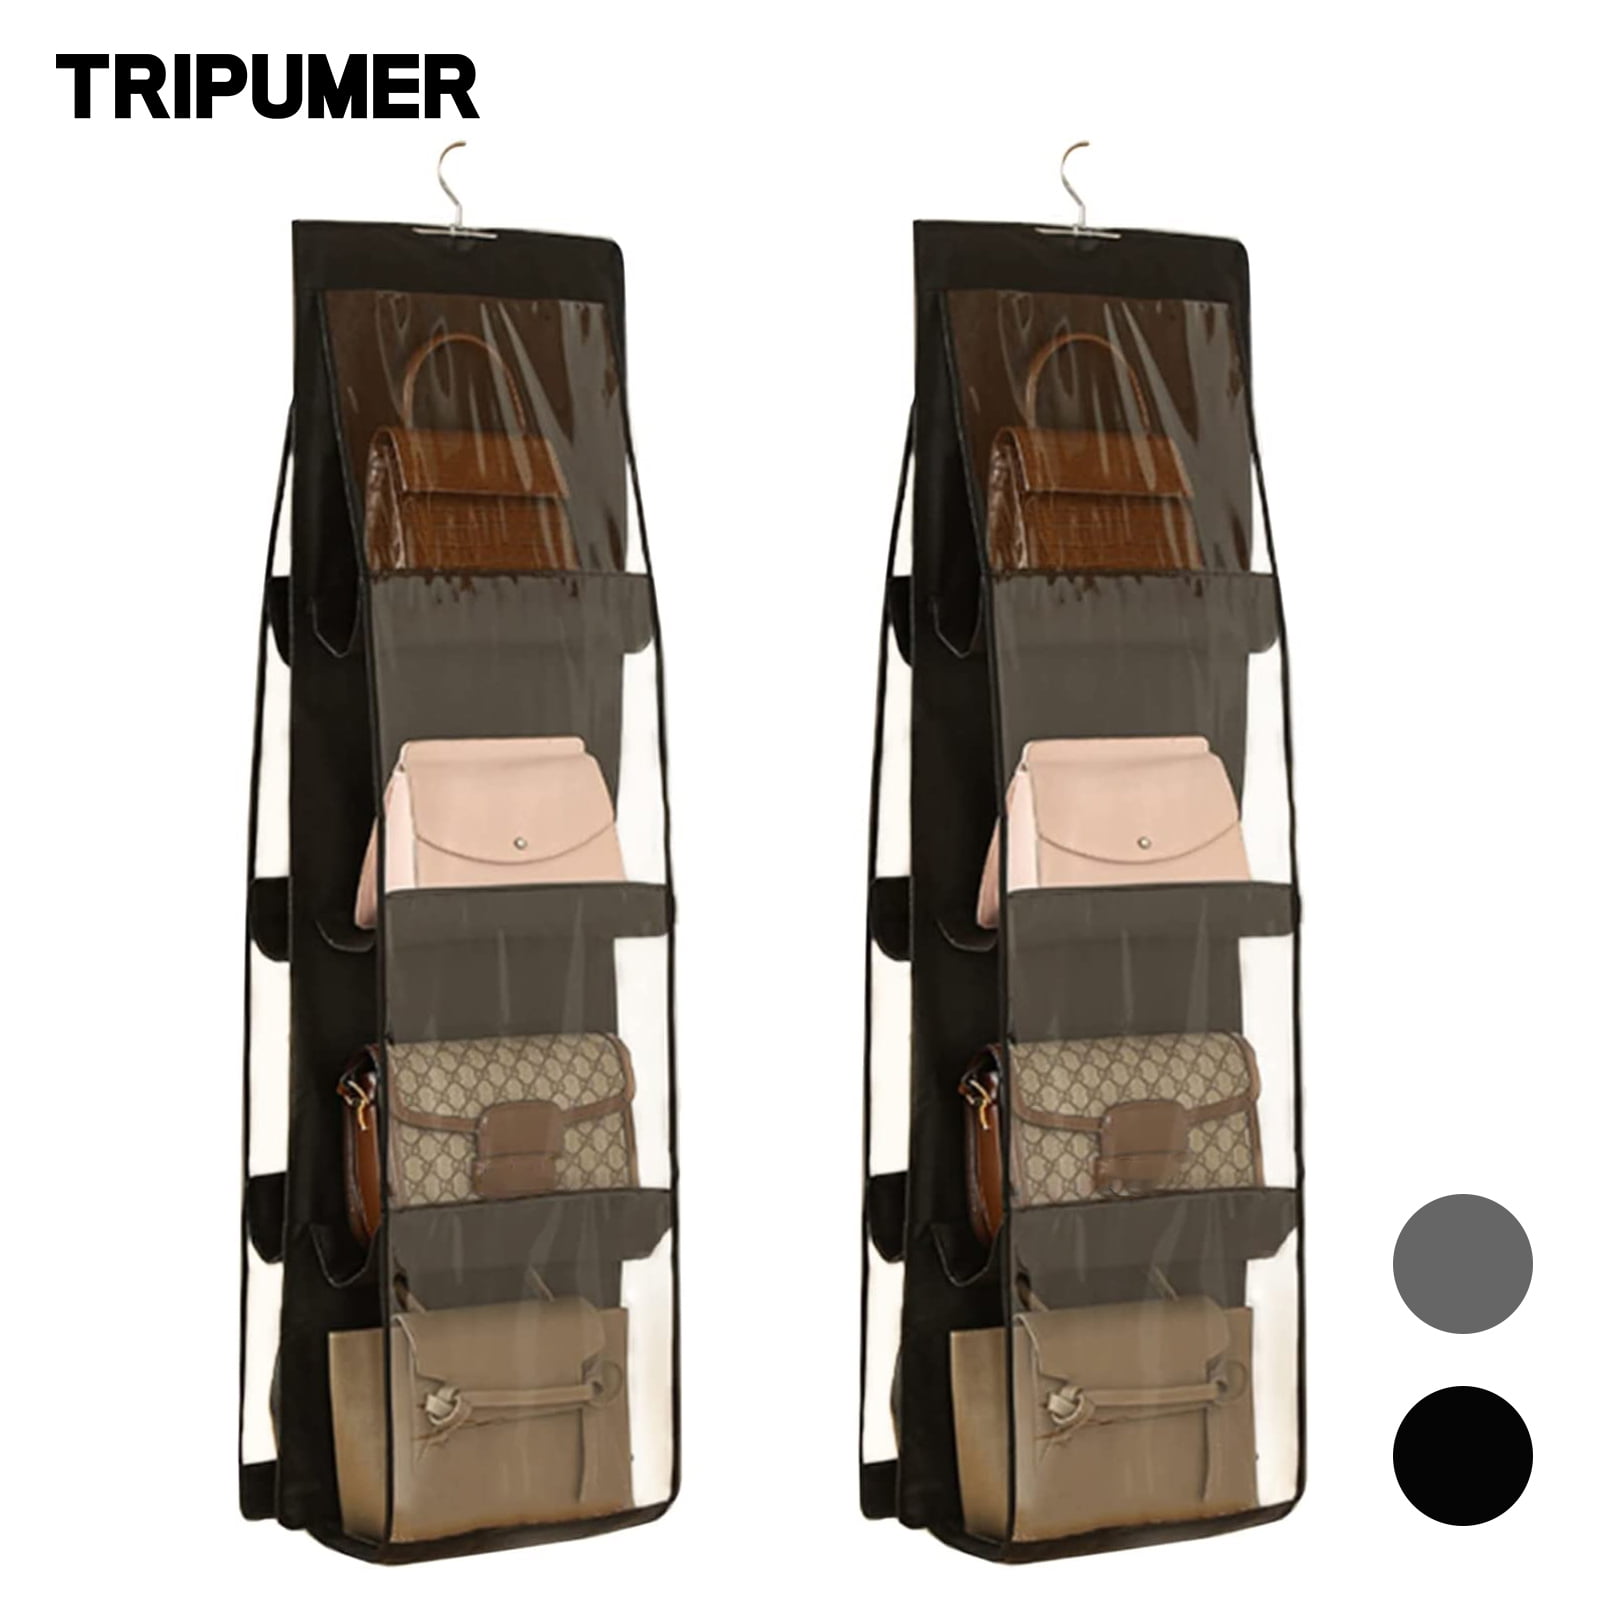 Tripumer Bag Hanging Bag 8 Pockets Foldable Handbag Organizer Double ...